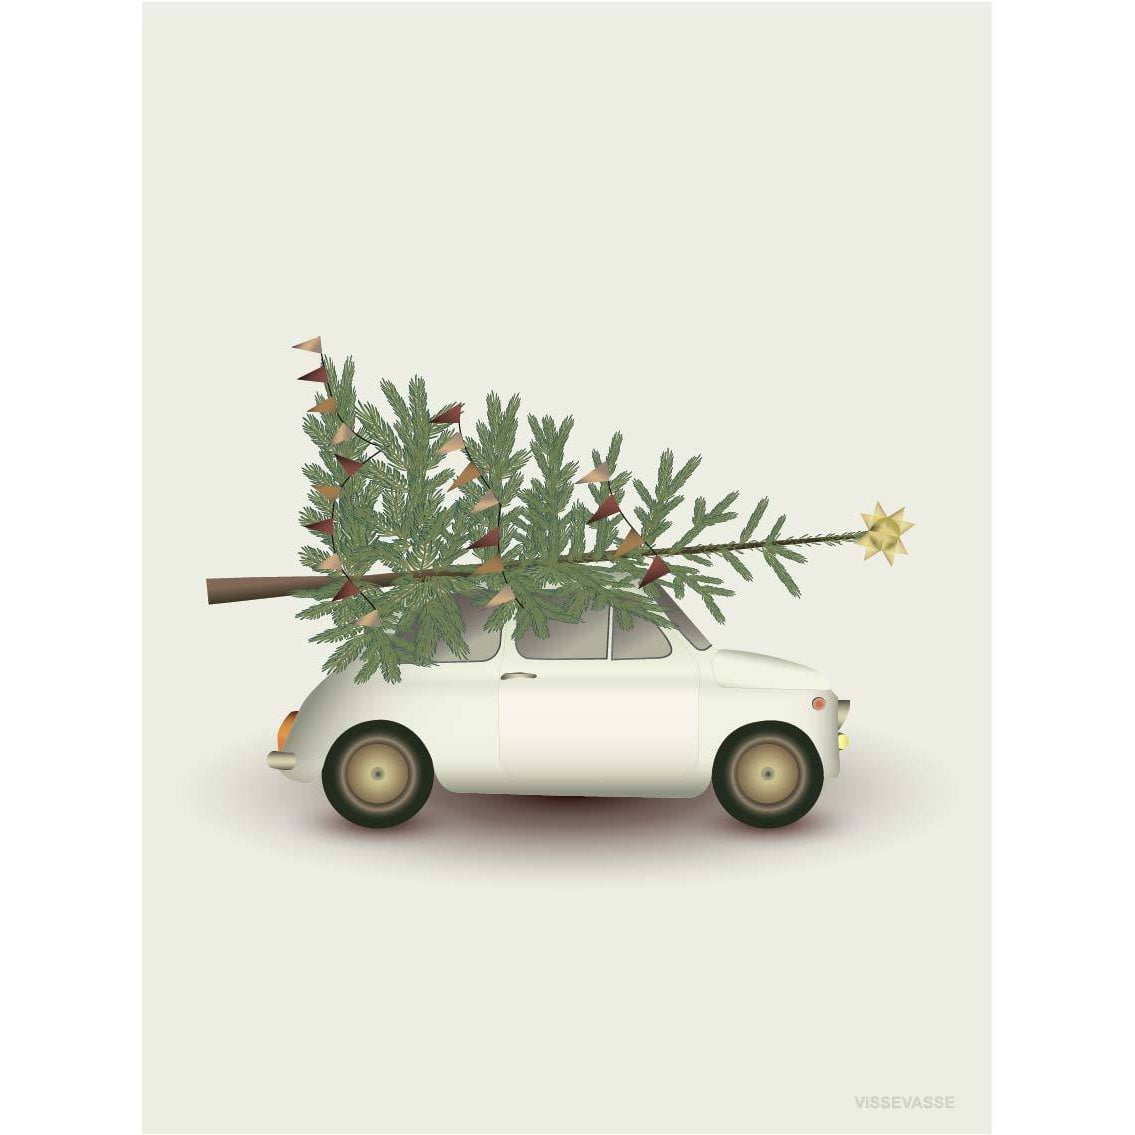 Vissevasse Christmas Tree & Little Car Greeting Card, 10,5x15cm